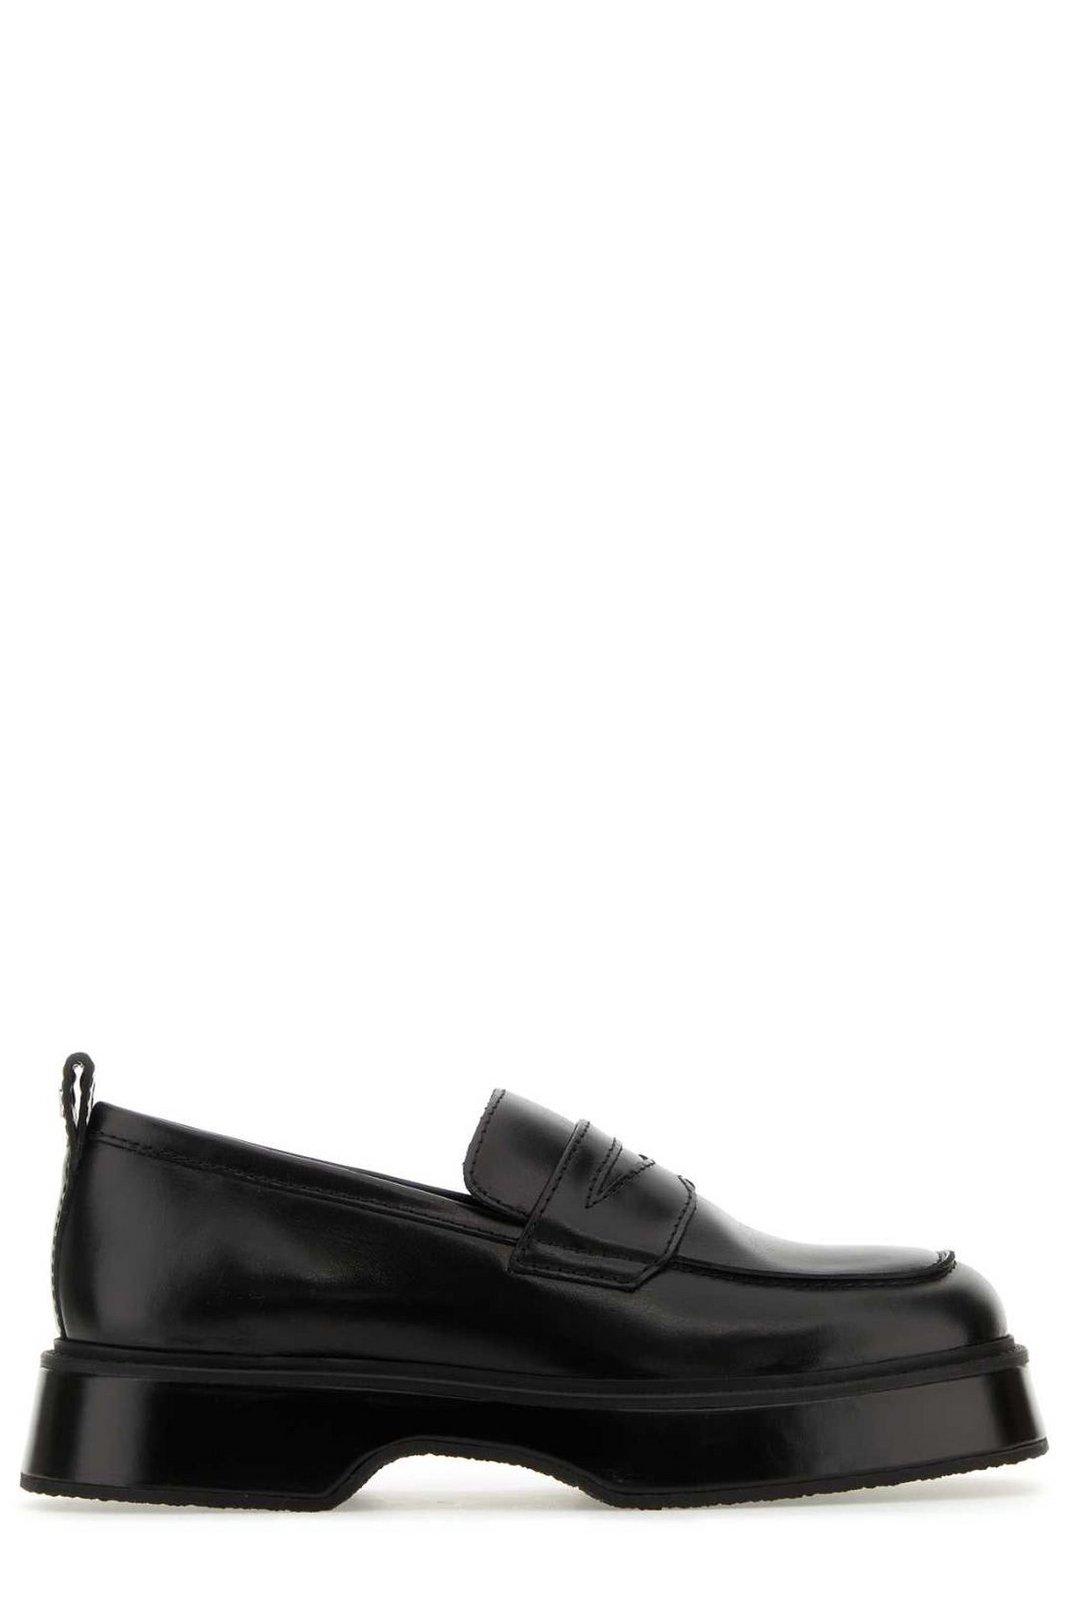 Shop Ami Alexandre Mattiussi Squared-toe Loafers Flat Shoes In Black